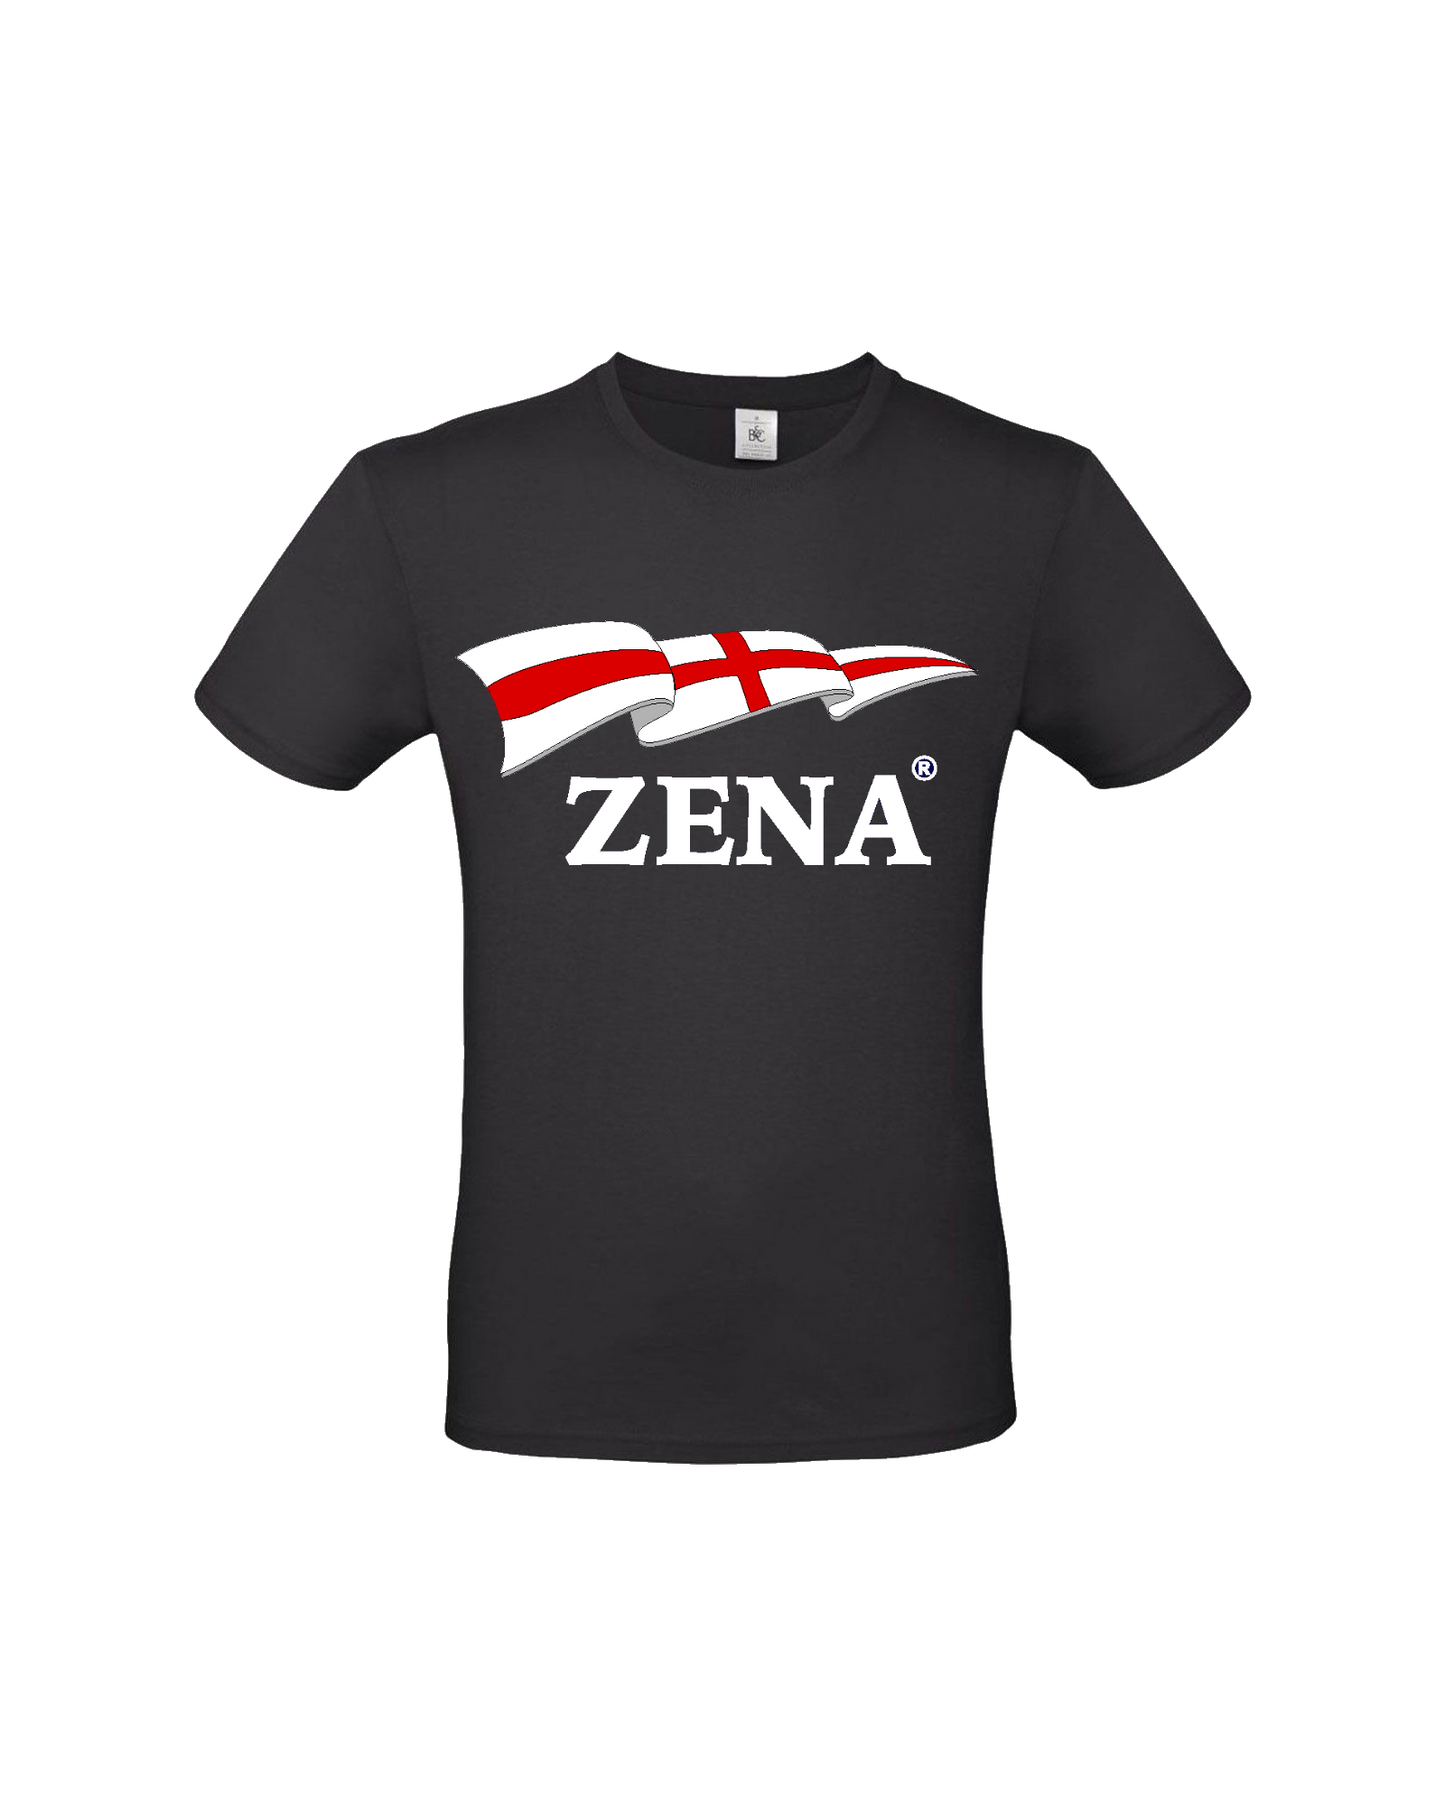 T-Shirt ZENA Original - Manica corta cotone